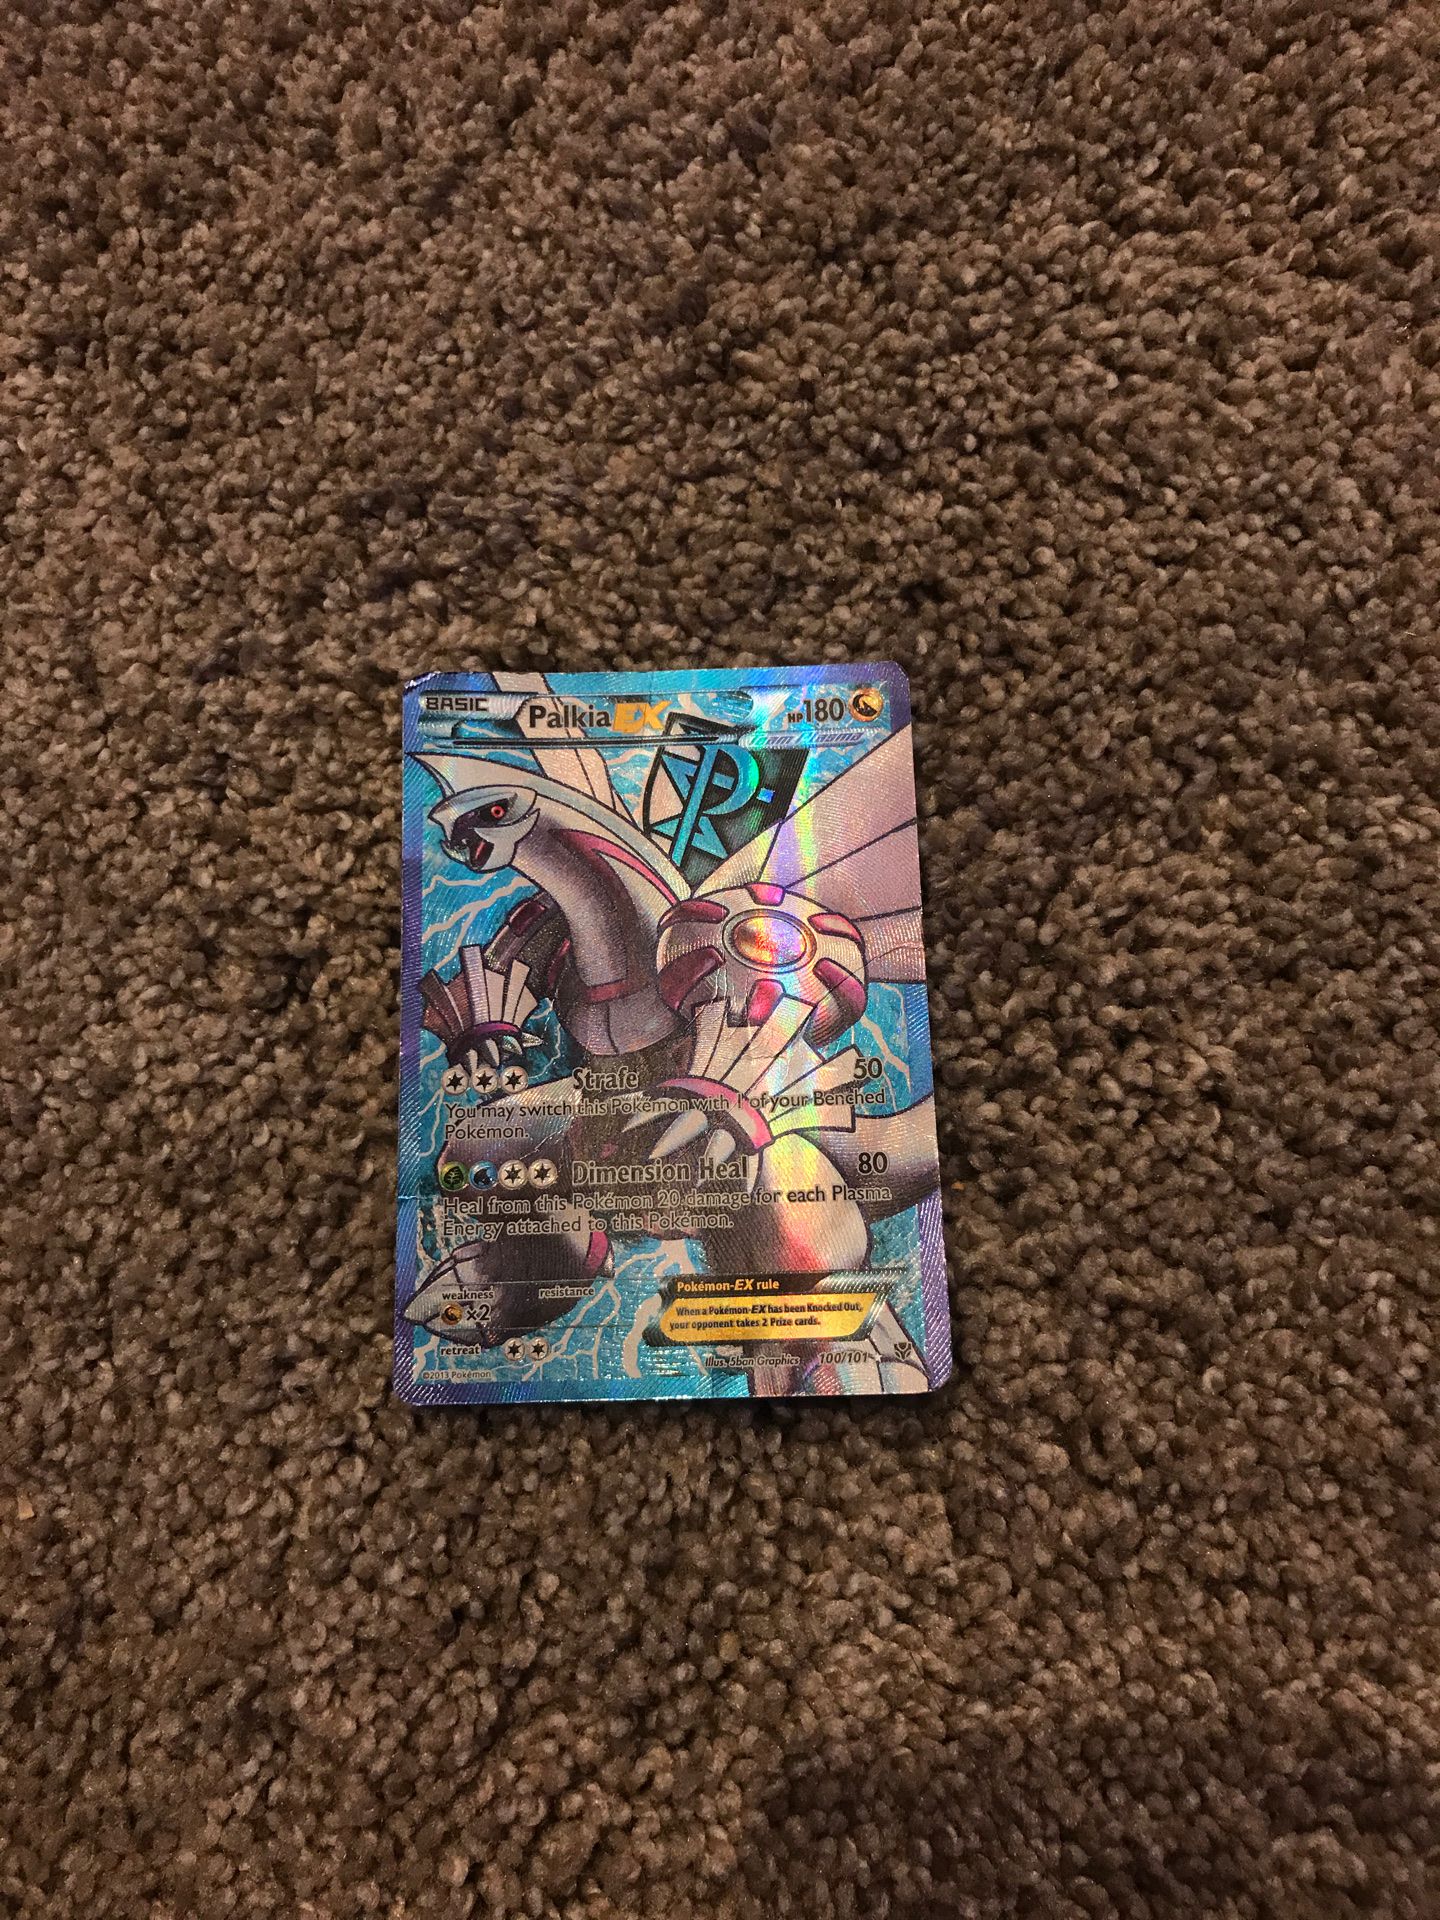 Palkia EX Ultra Rare Pokémon Card